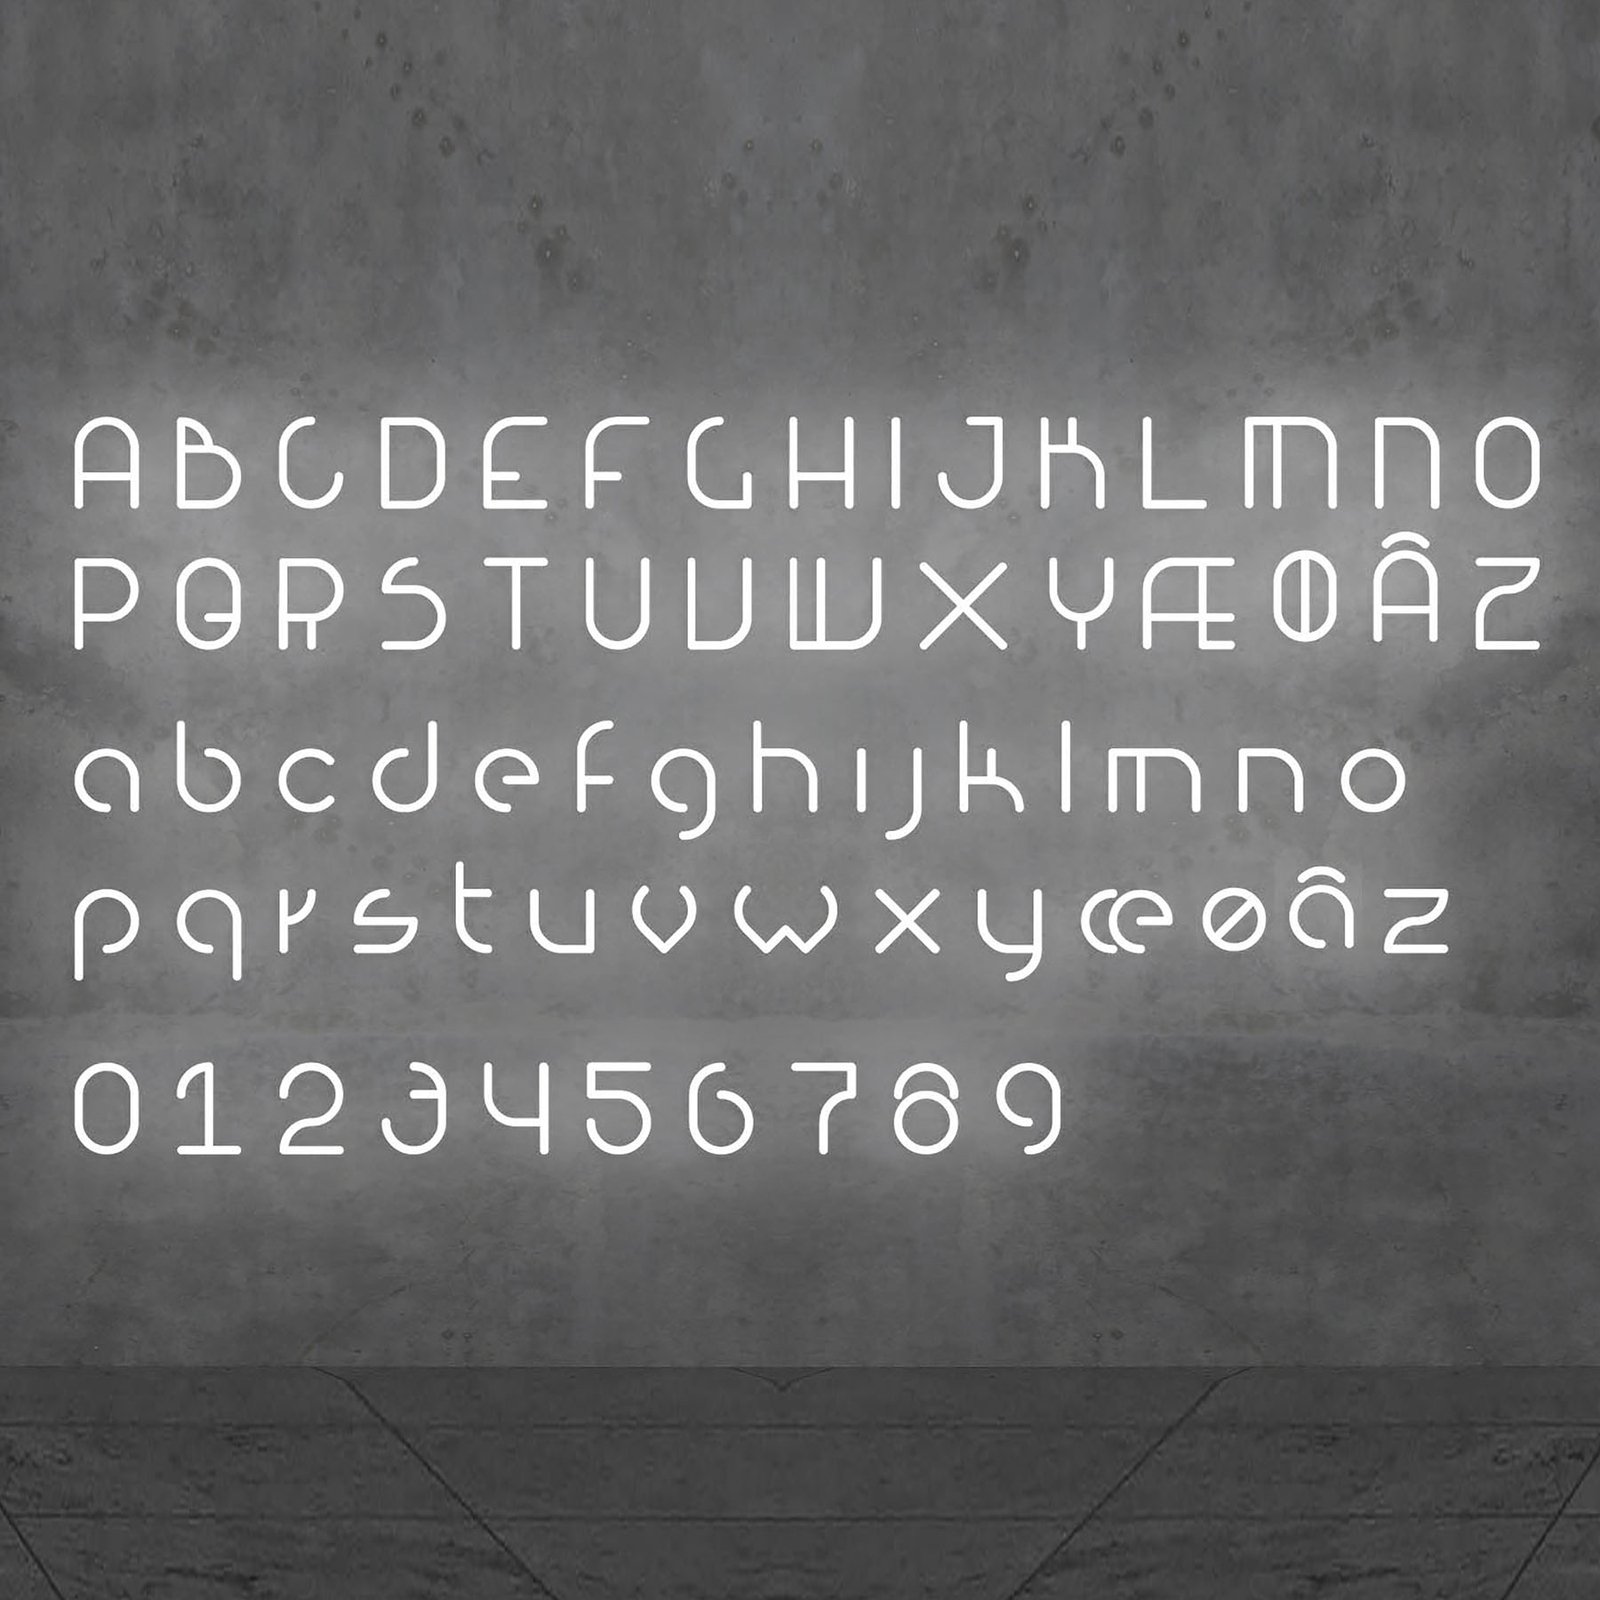 Artemide Alphabet of Light væg, lille bogstav s